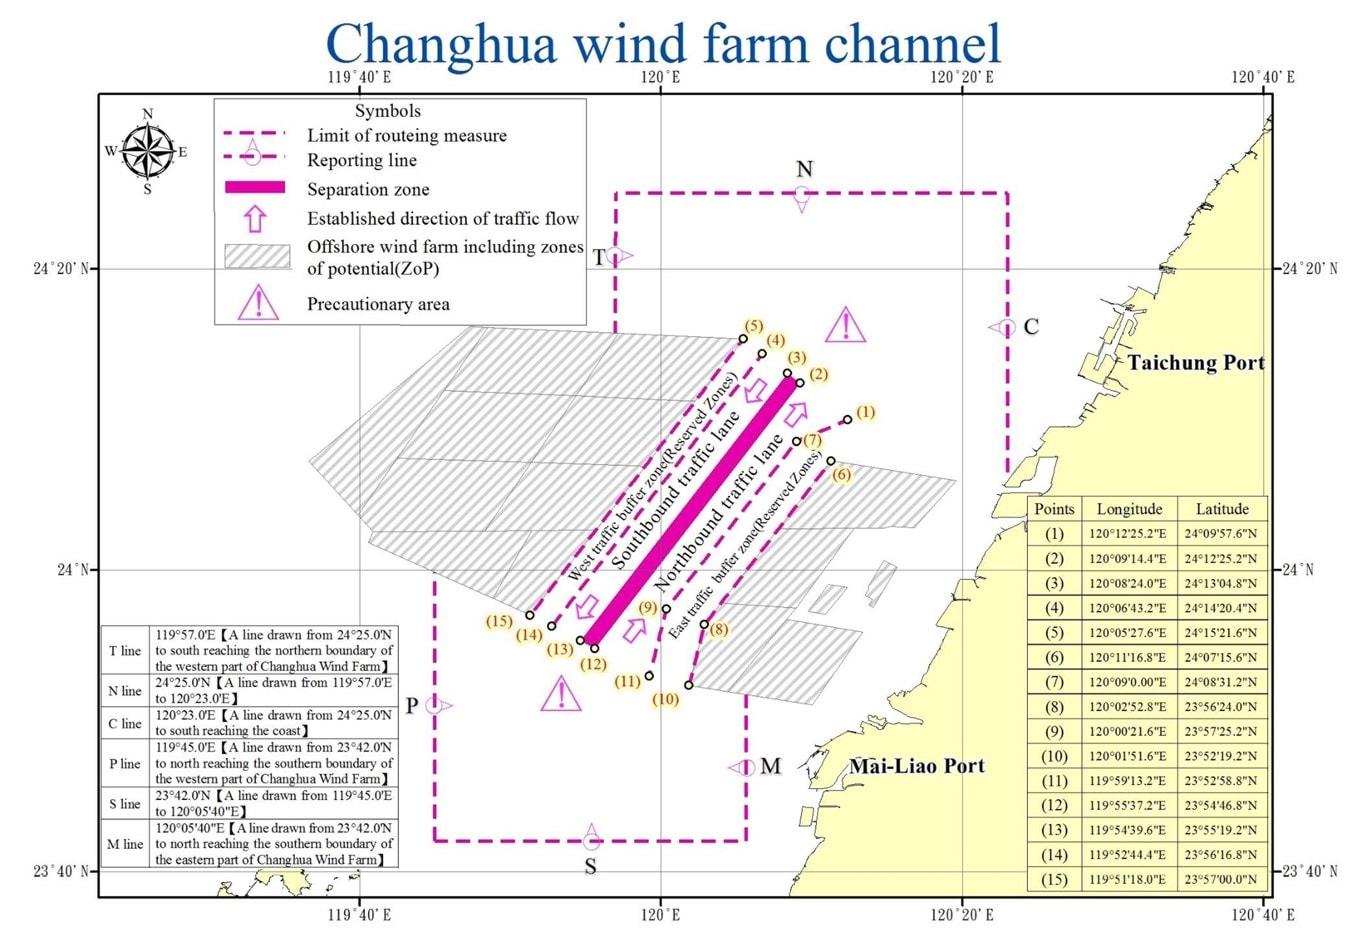 The-Changhua-Wind-Farm-Channel-2